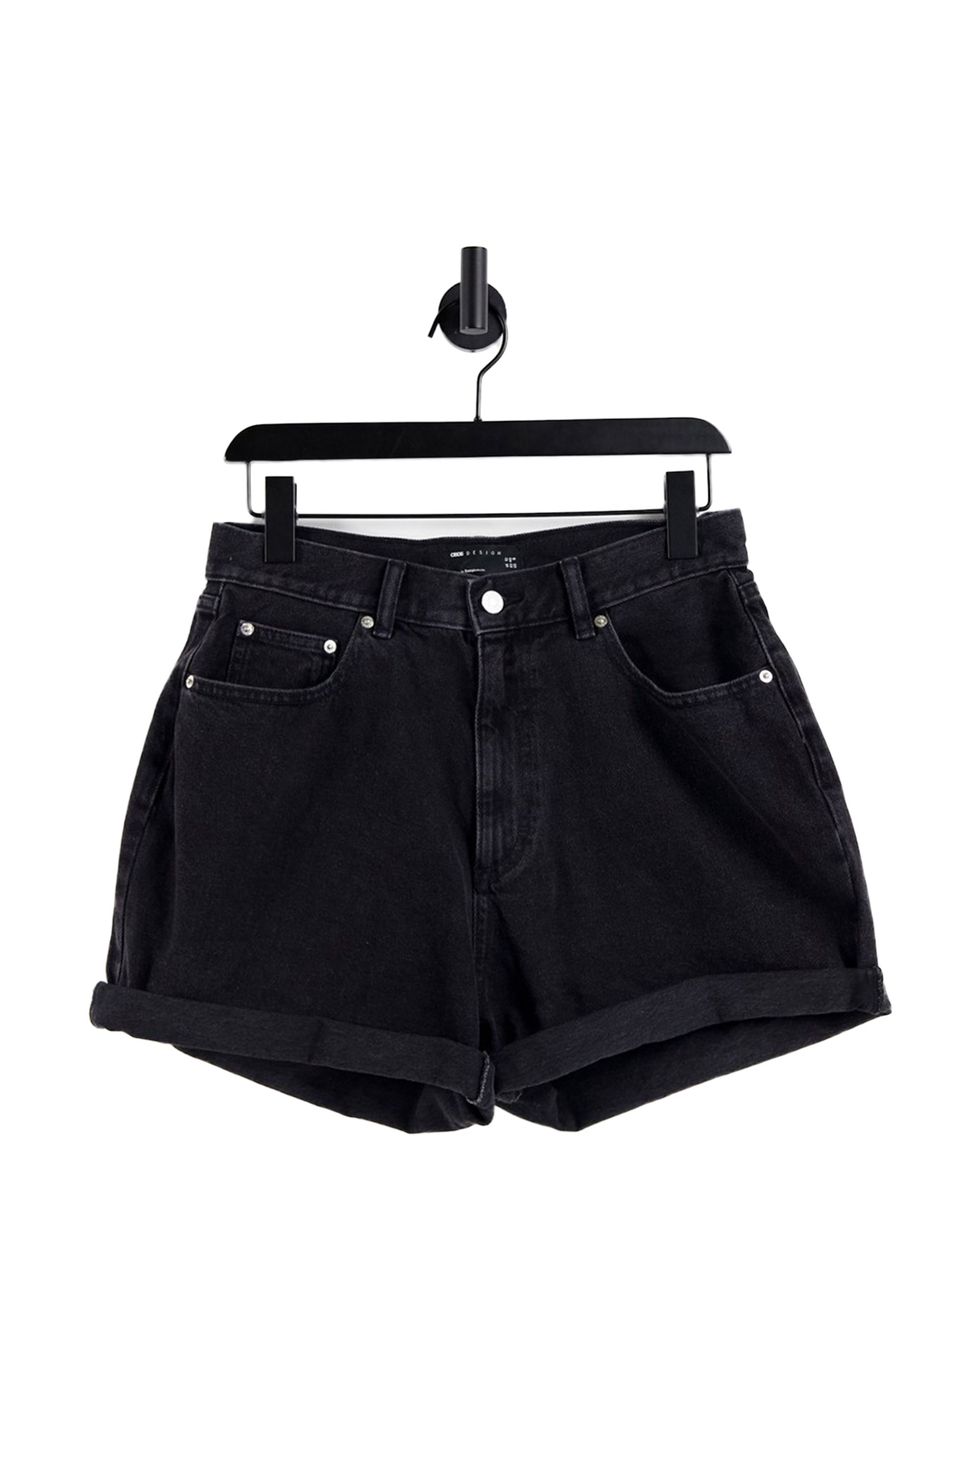 The Best Jean Shorts for Women to Wear in Summer 2023